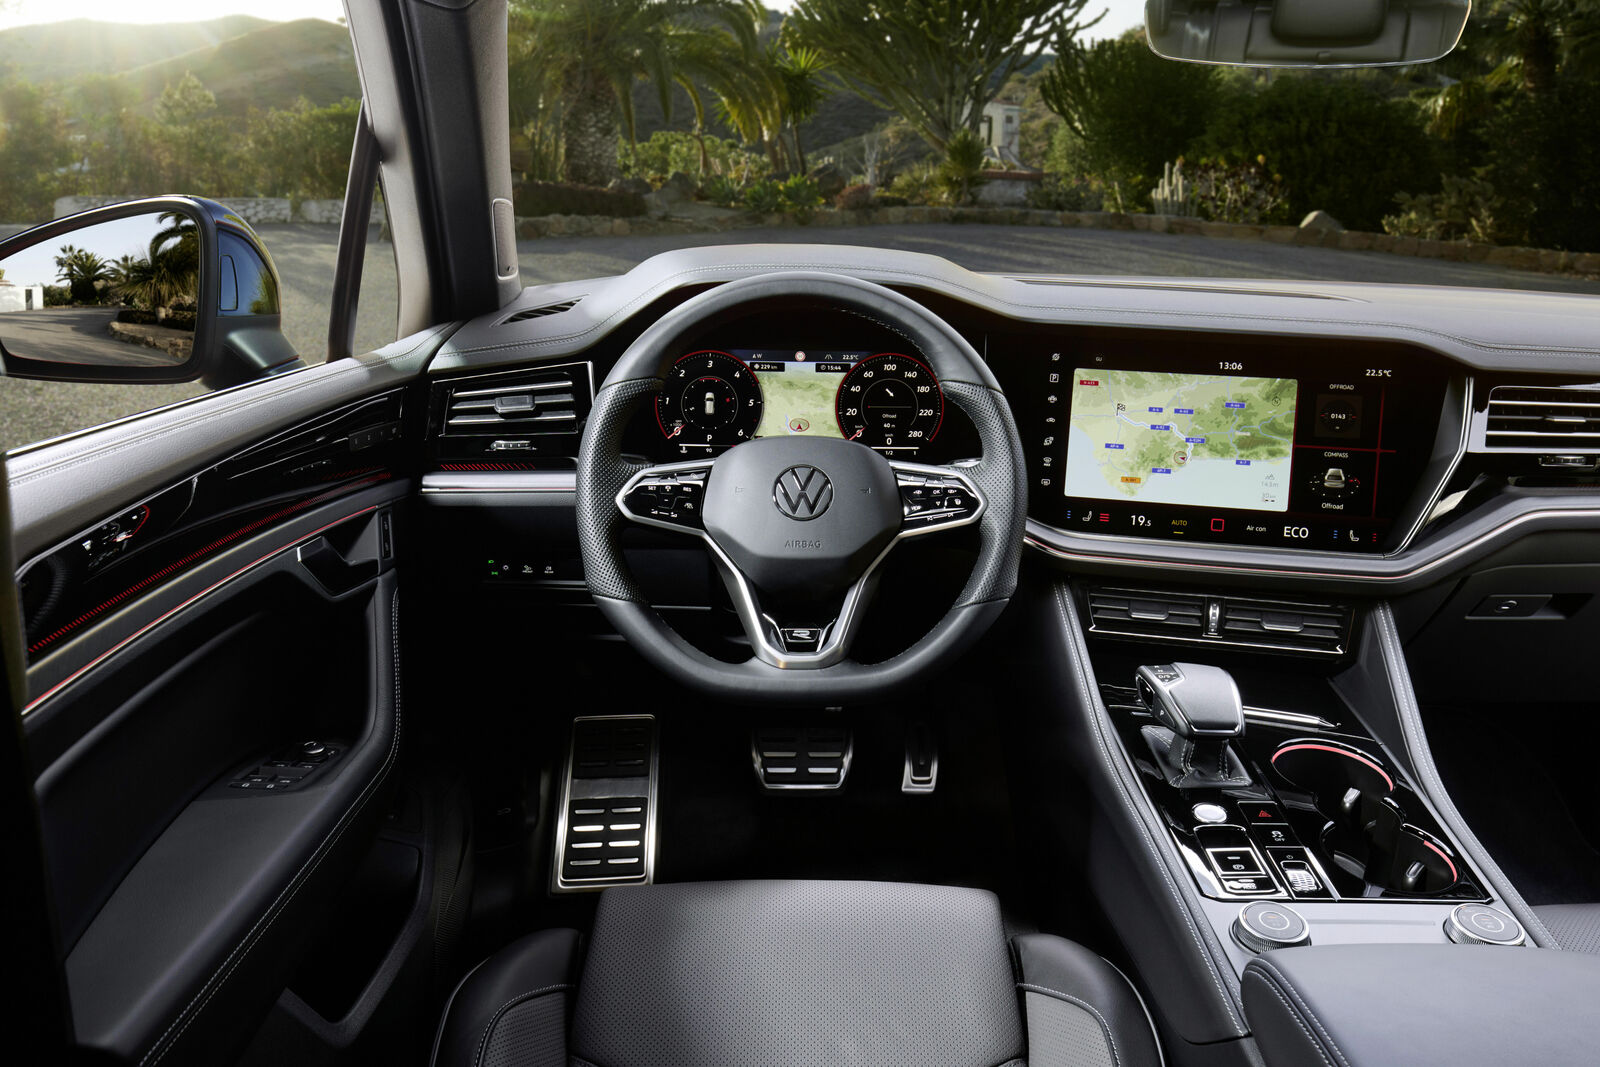 New technologies, more comfort: Volkswagen presents the new Touareg